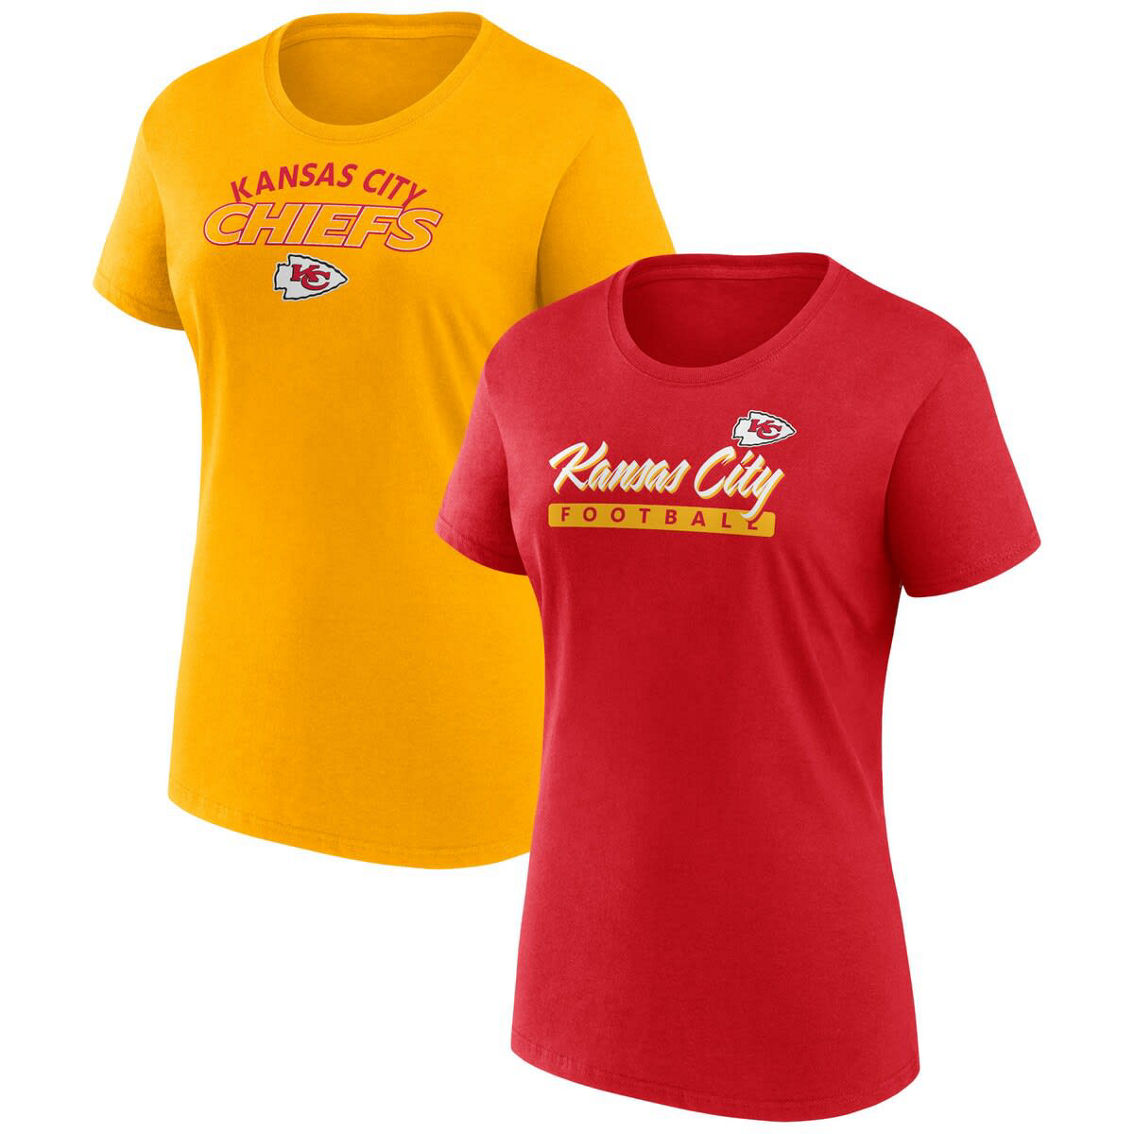 Fanatics Branded Women's Kansas City Chiefs Risk T-Shirt Combo Pack - Image 2 of 4